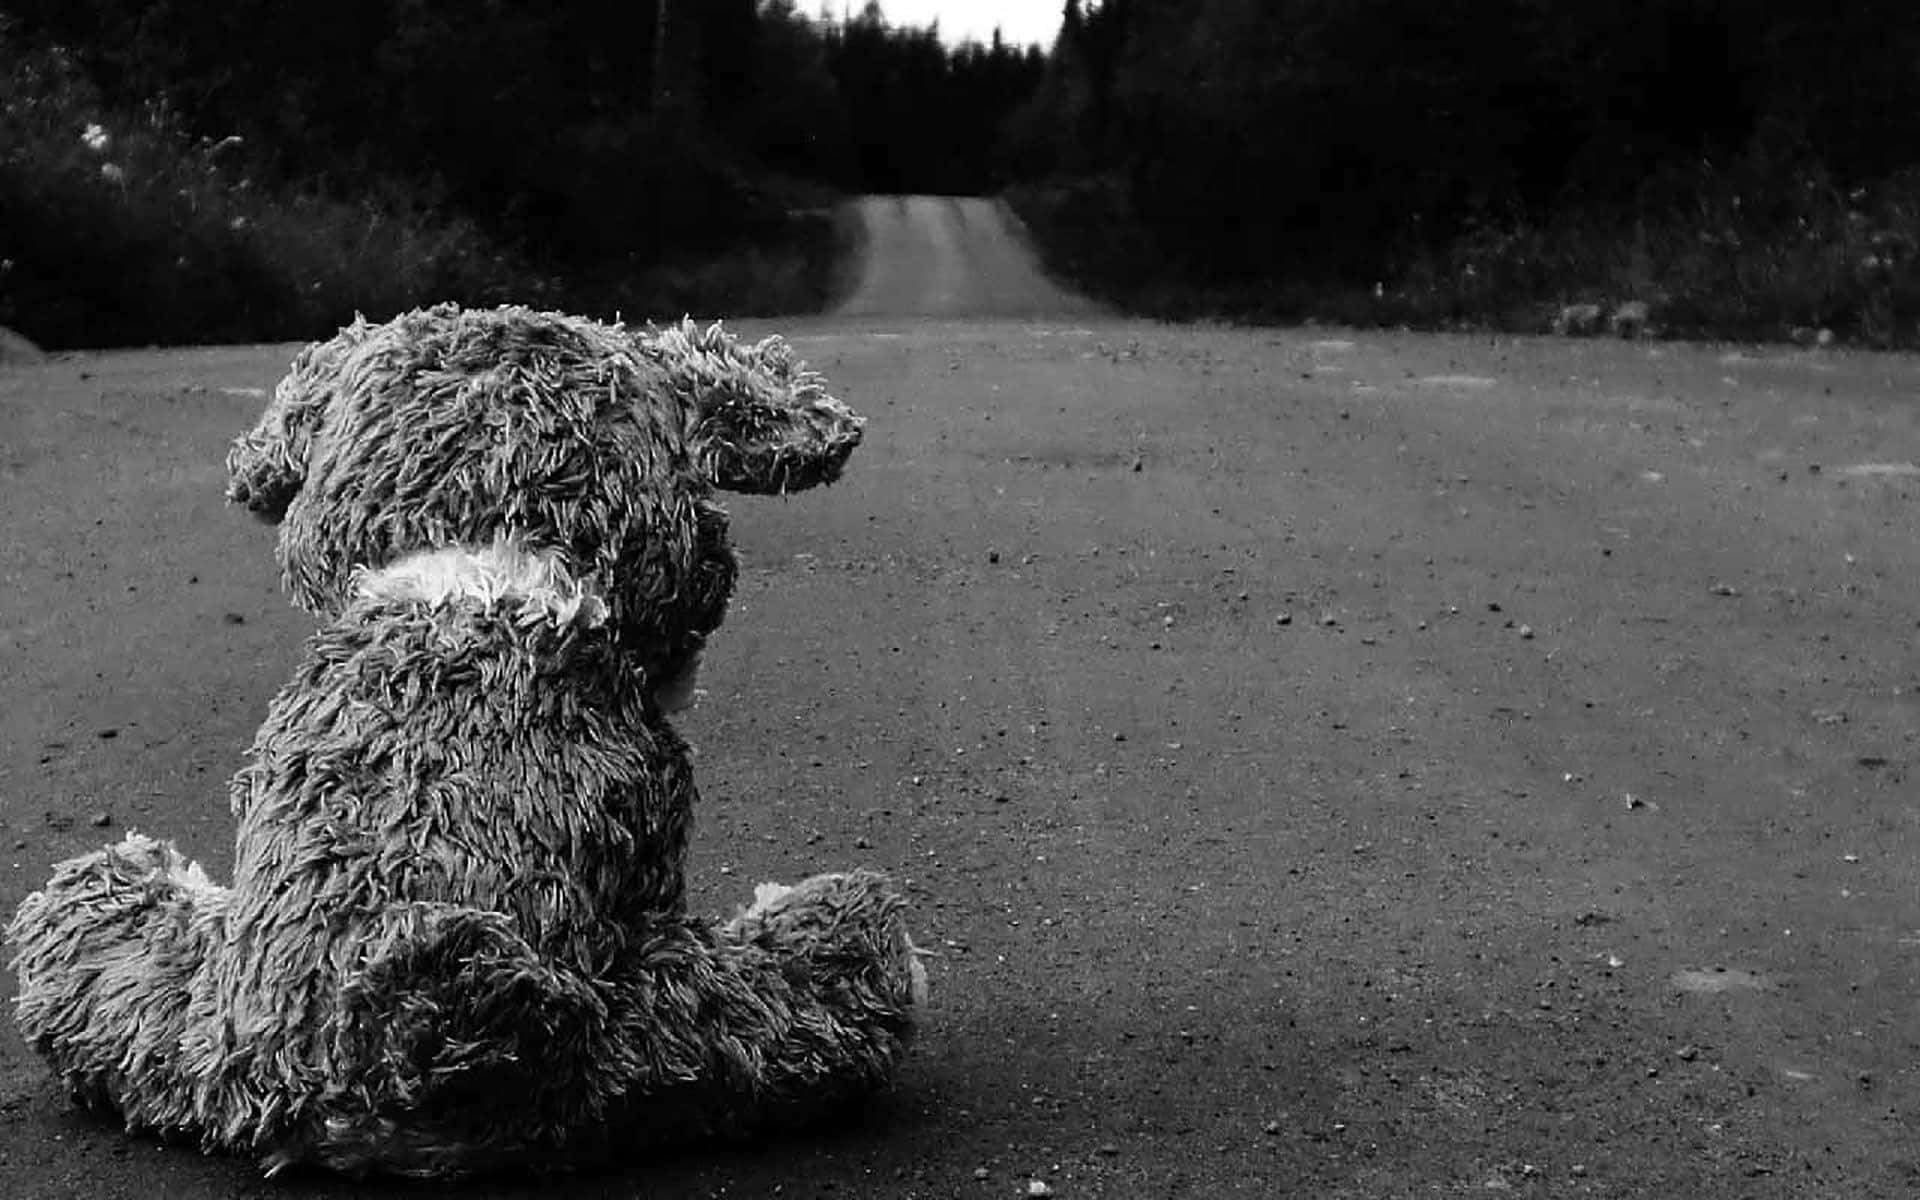 Dark Depressing Abandoned Teddy Bear On The Road